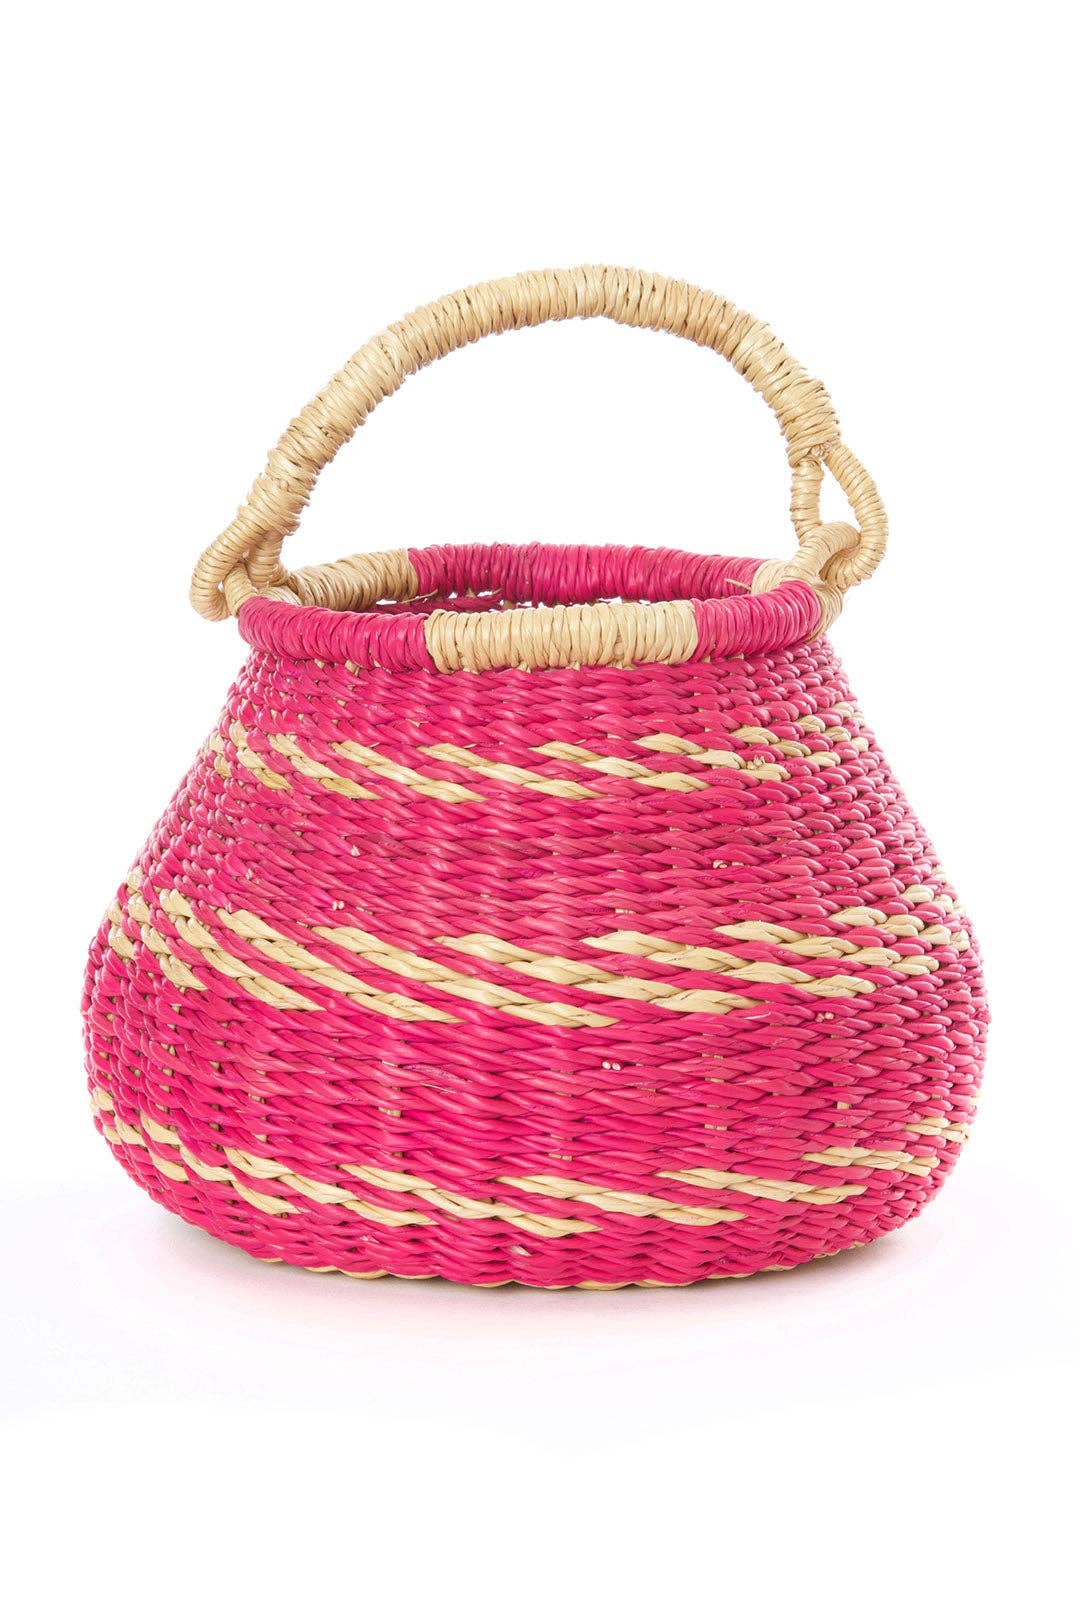 Pink & Natural Baby Ghanaian Kettle Basket - Spiral Circle